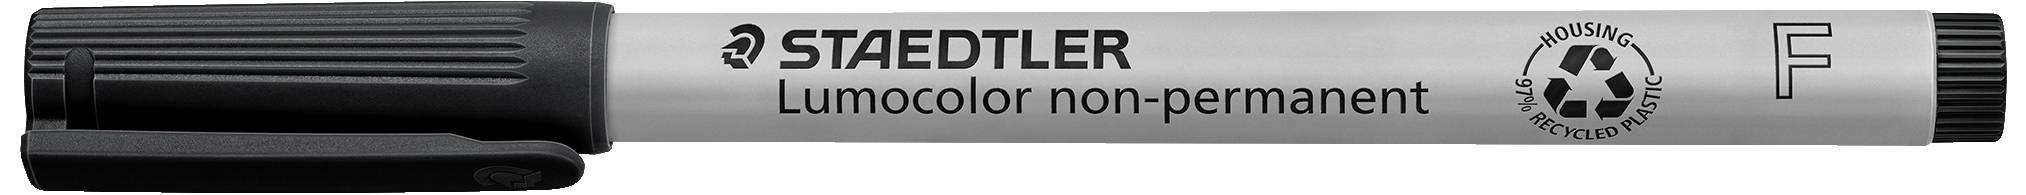 STAEDTLER Projektionsschreiber Lumocolor 316 wlös